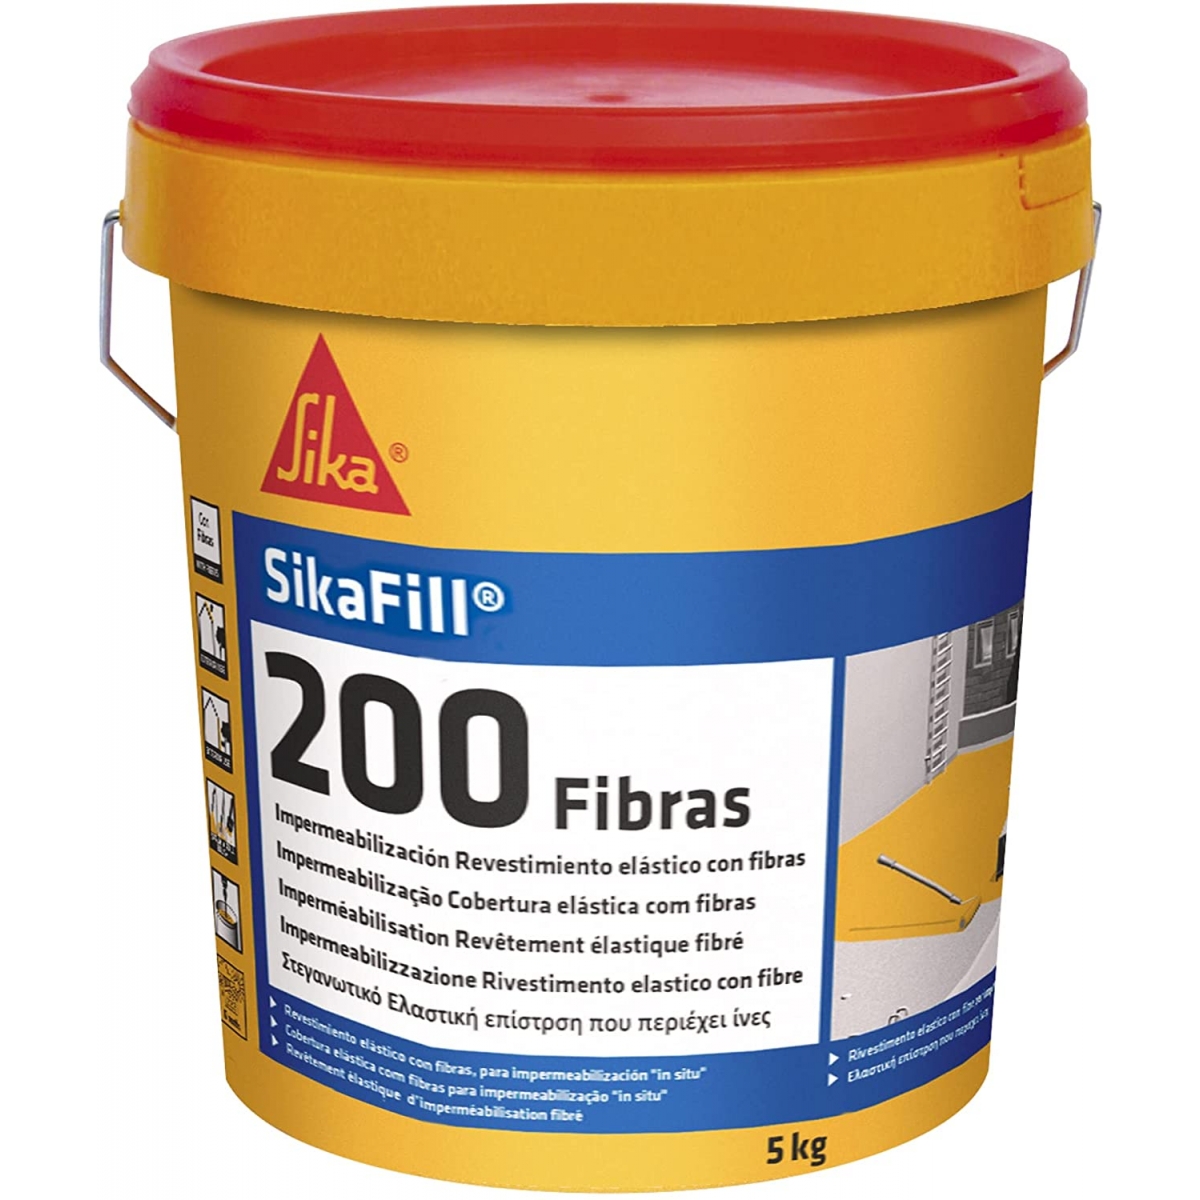 Sikafill 200 Fibras 5kg Blanco - Sika